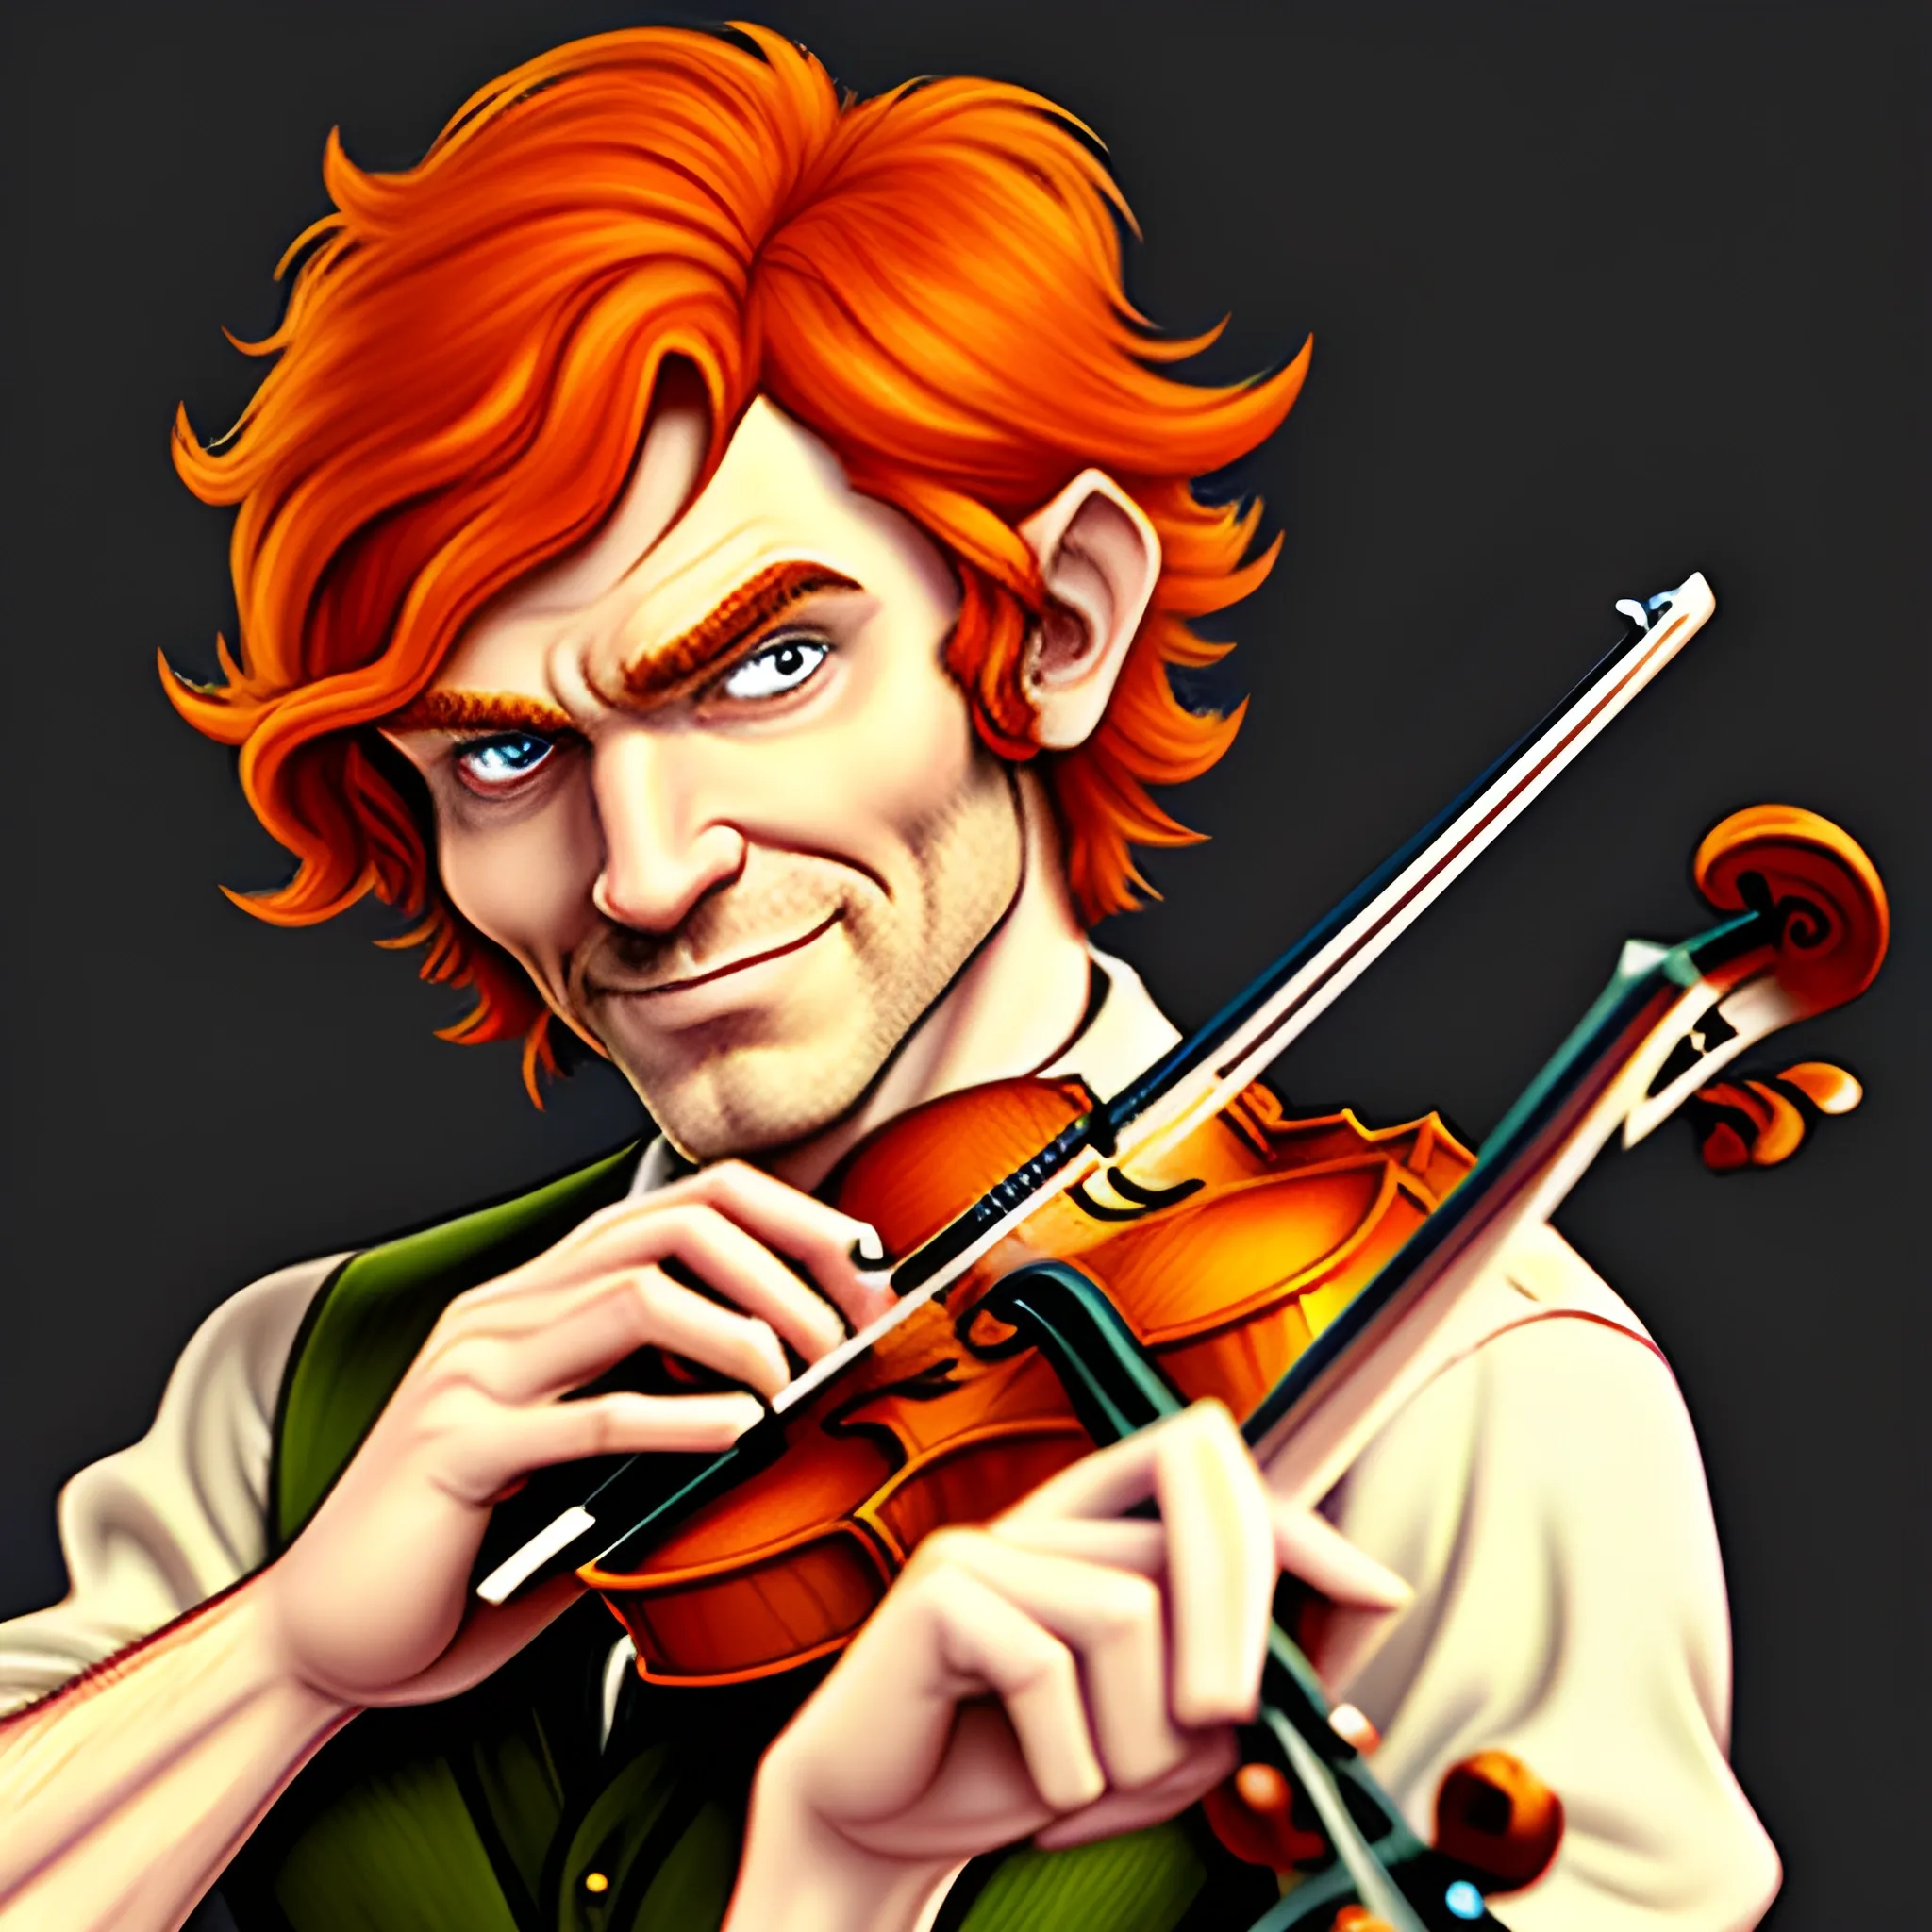 , Cartoon dnd hobbit ginger slim baby face man holding a violin